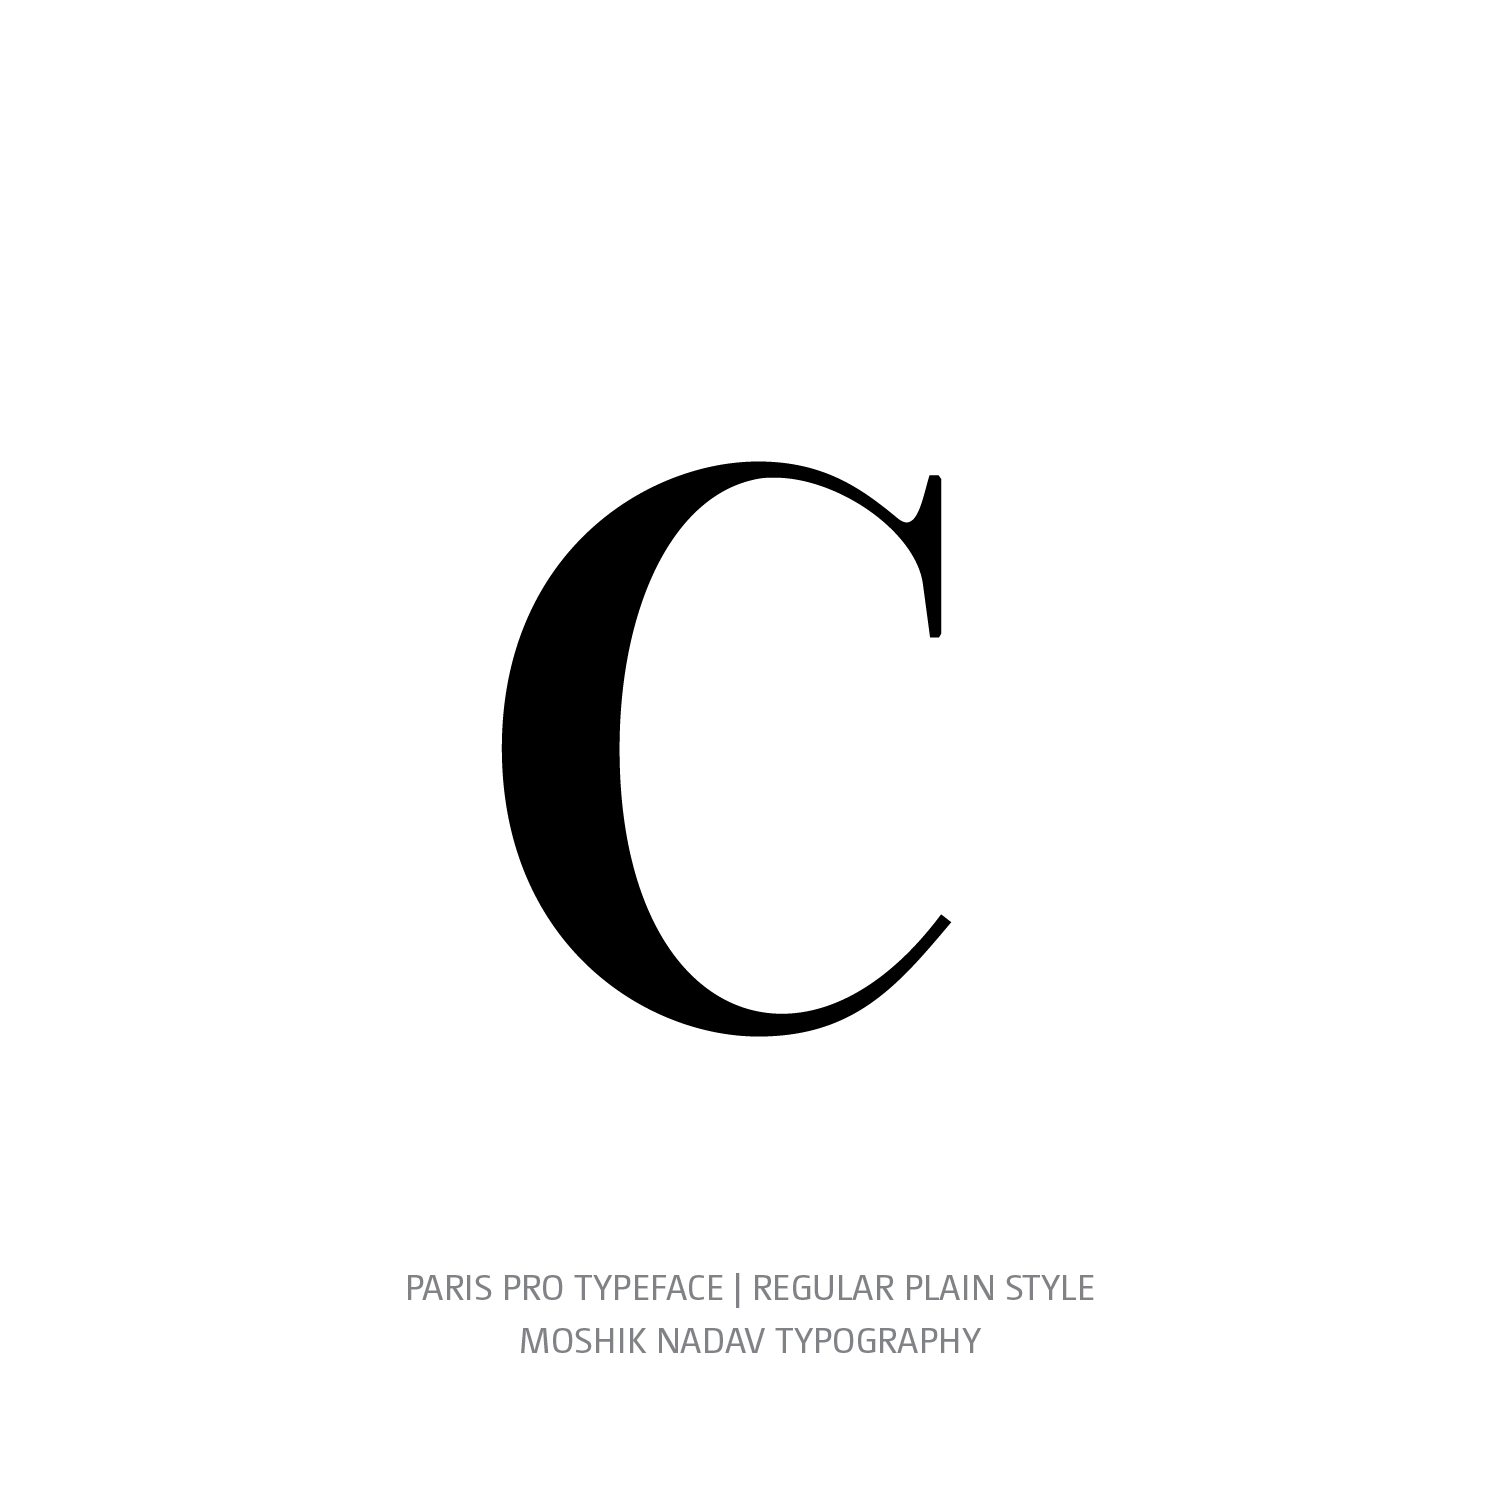 Paris Pro Typeface Regular Plain c